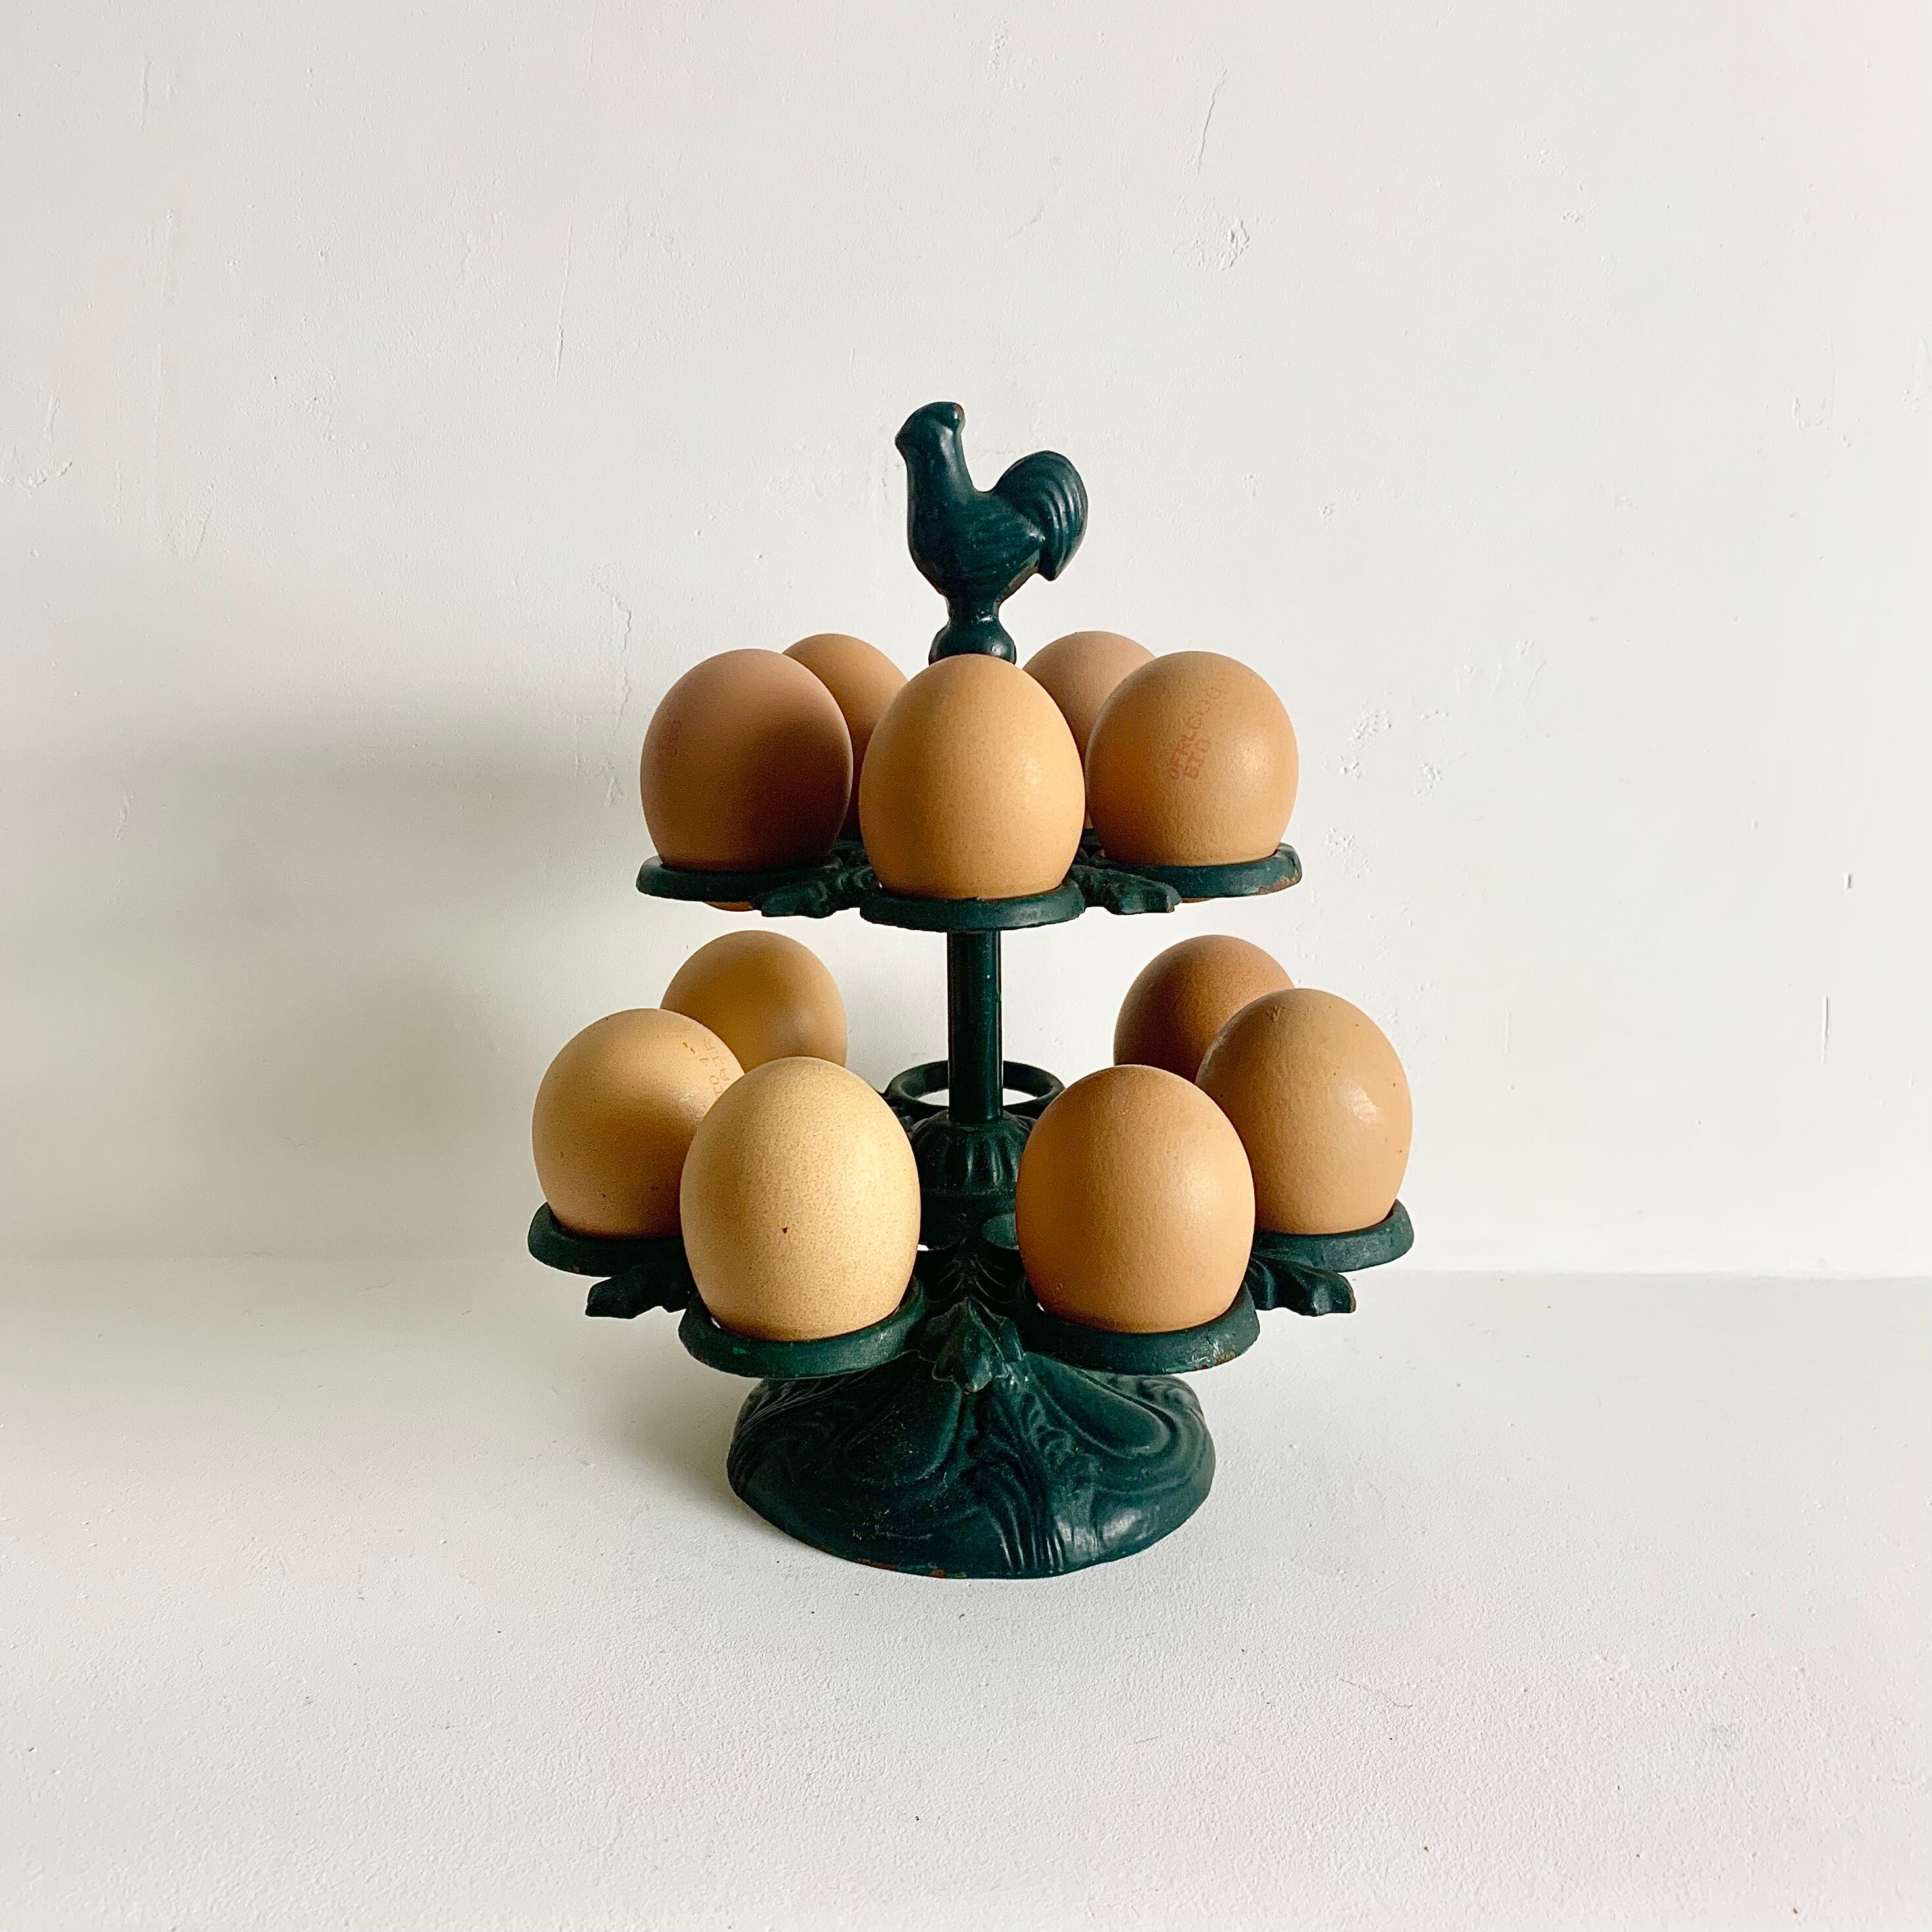 Sungmor Heavy Duty Cast Iron Eggs Holder Countertop Decor - Kitchen & Dining Room Organization Egg Stroage Dsiplay Rack - Vintage Dark Brown Colo